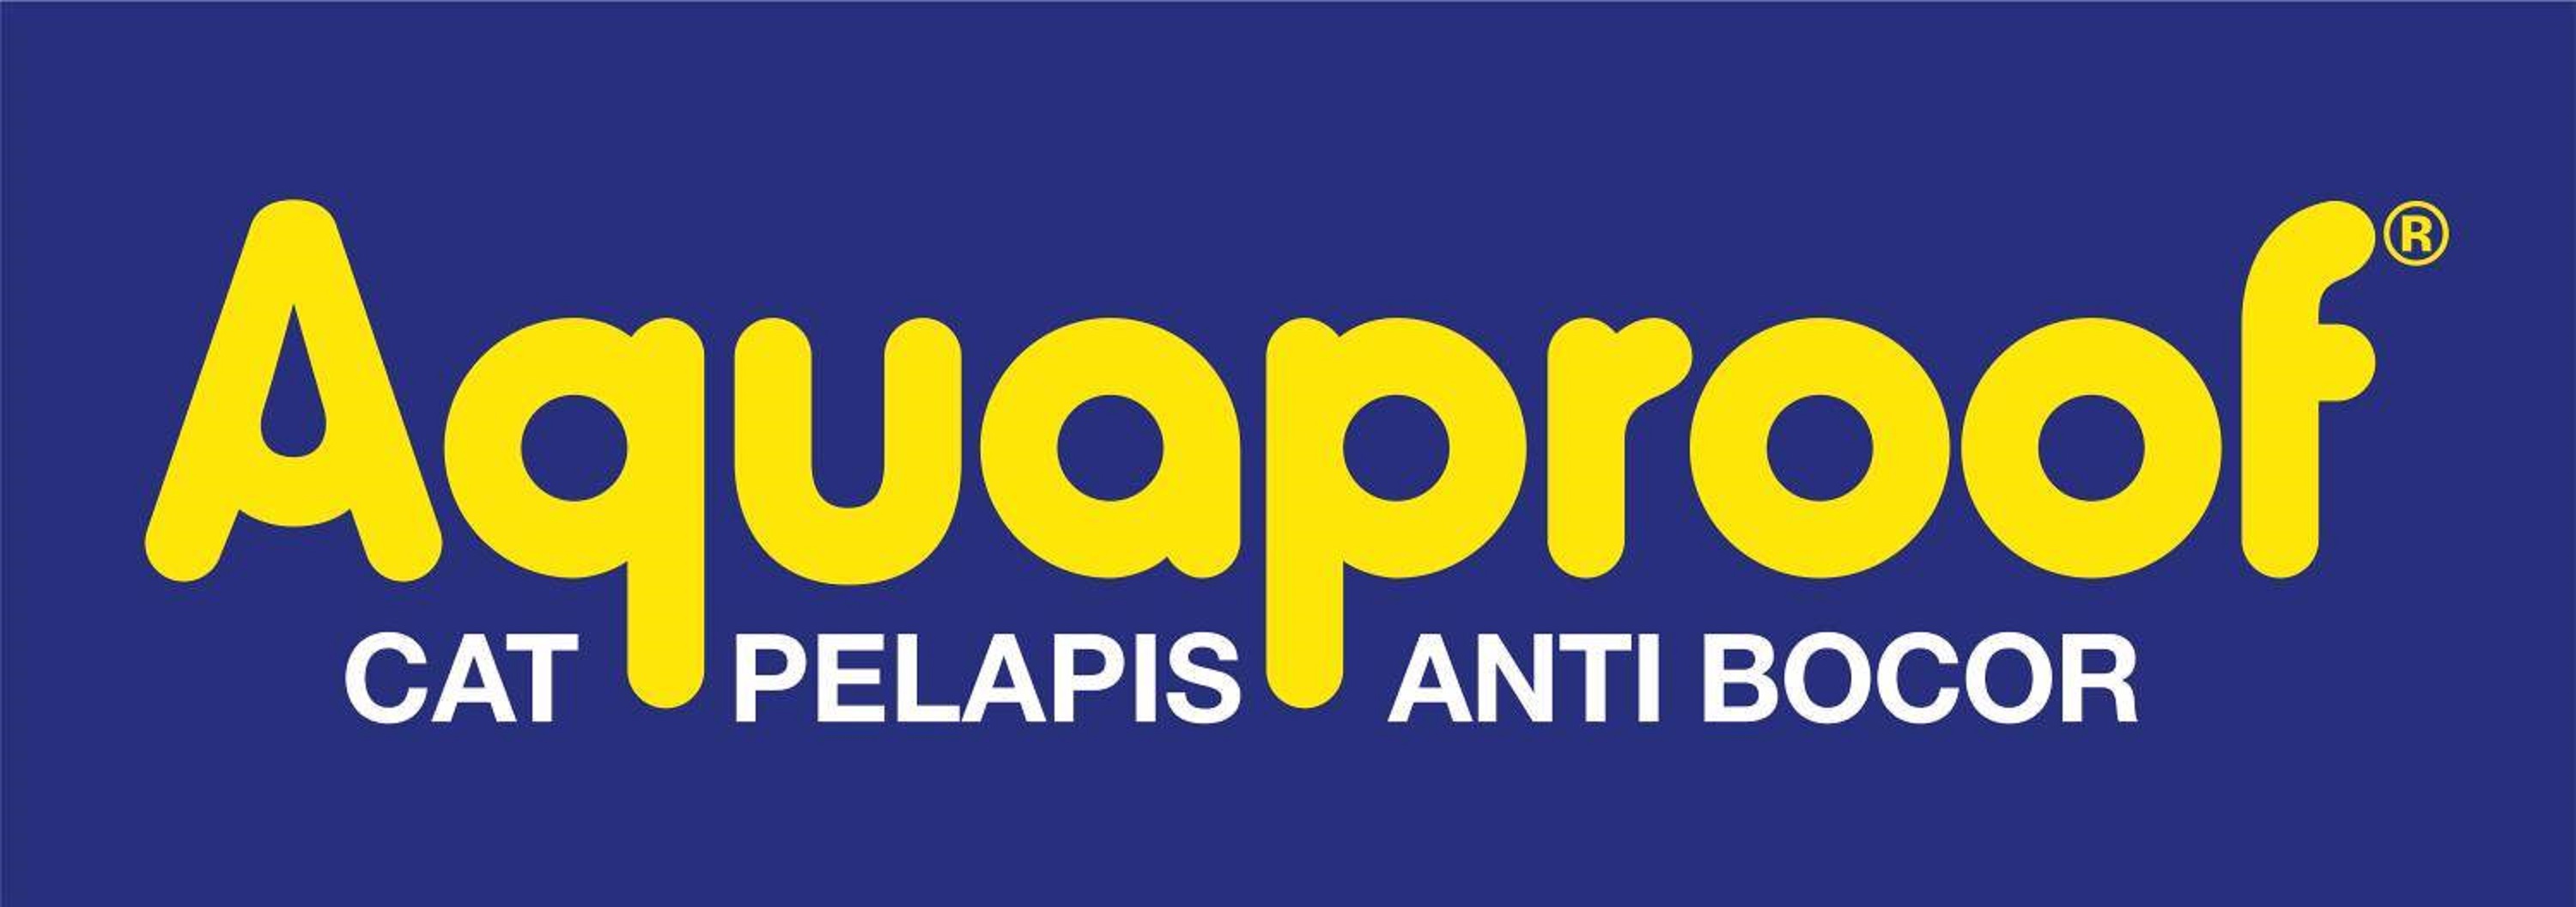 Aquaproof Official Store